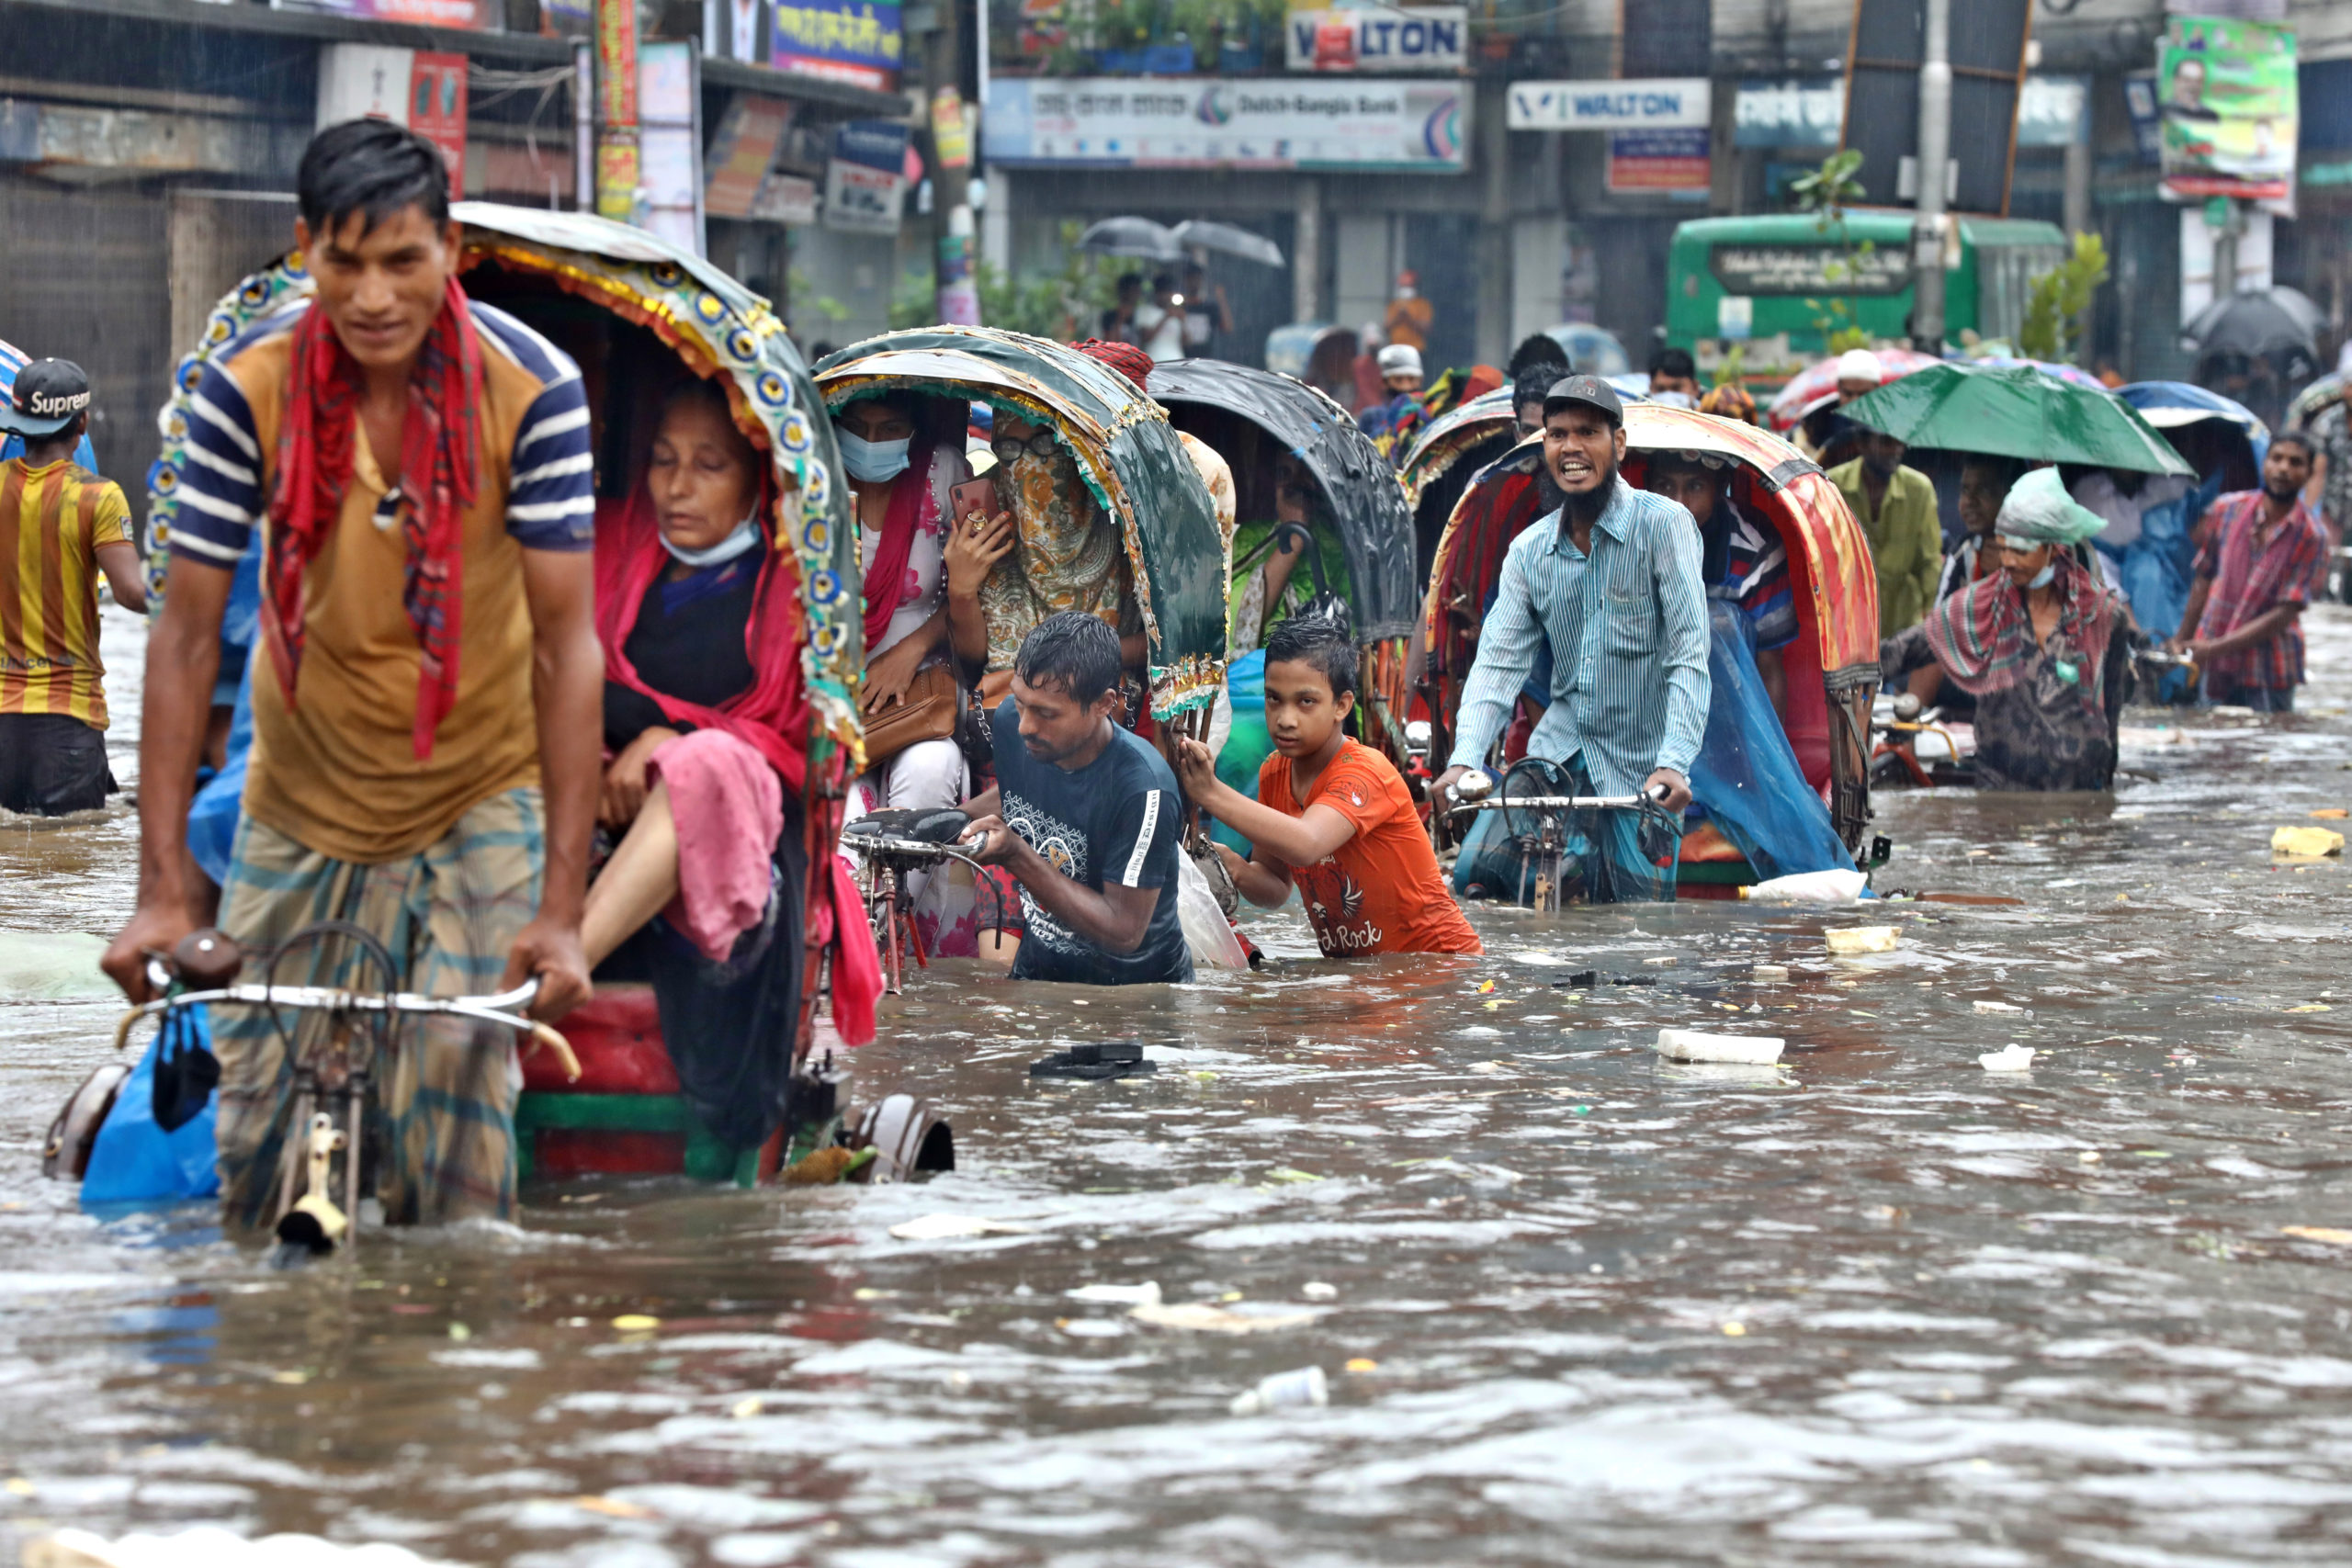 Bicycle rickshaws try to drive through a flooded street in Dhaka.